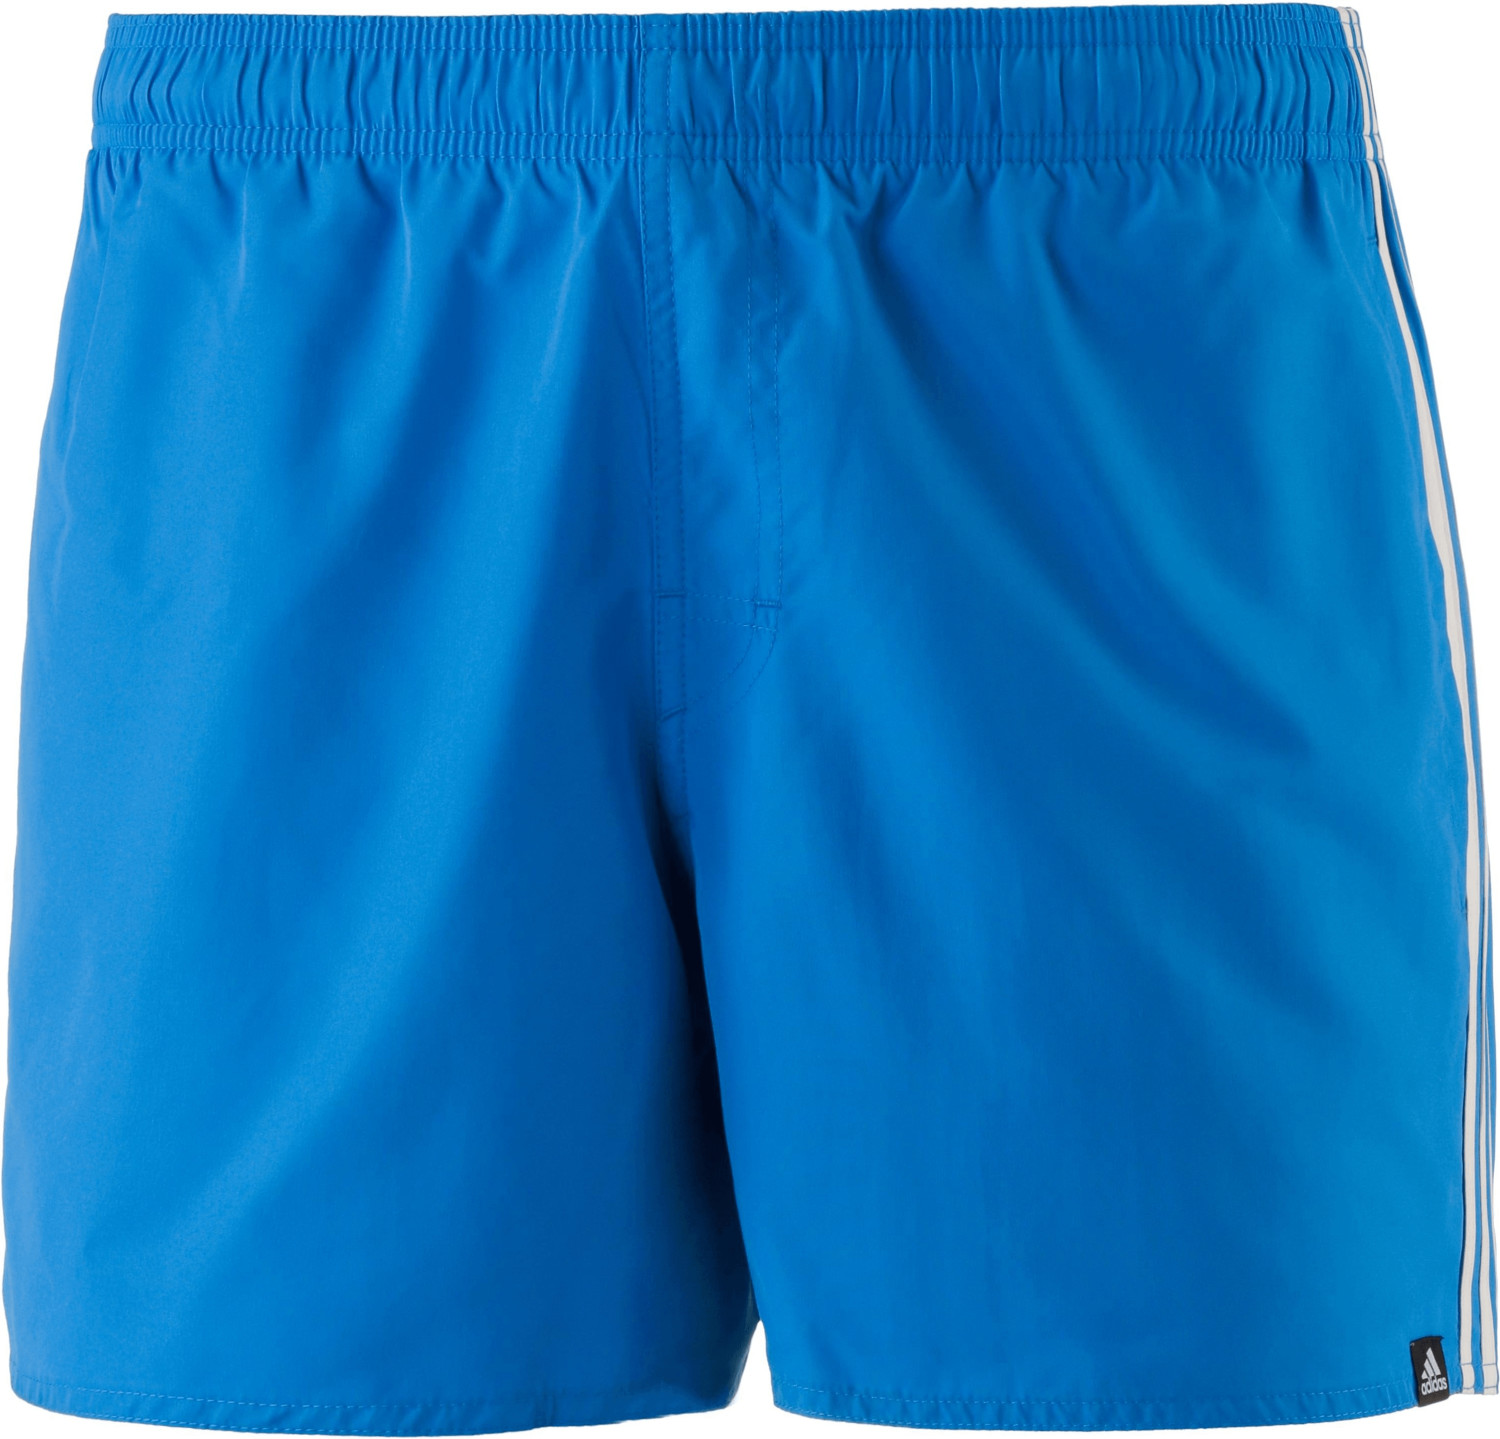 Adidas 3-Stripes Swim Shorts Bright Blue/Off White (CV5192)